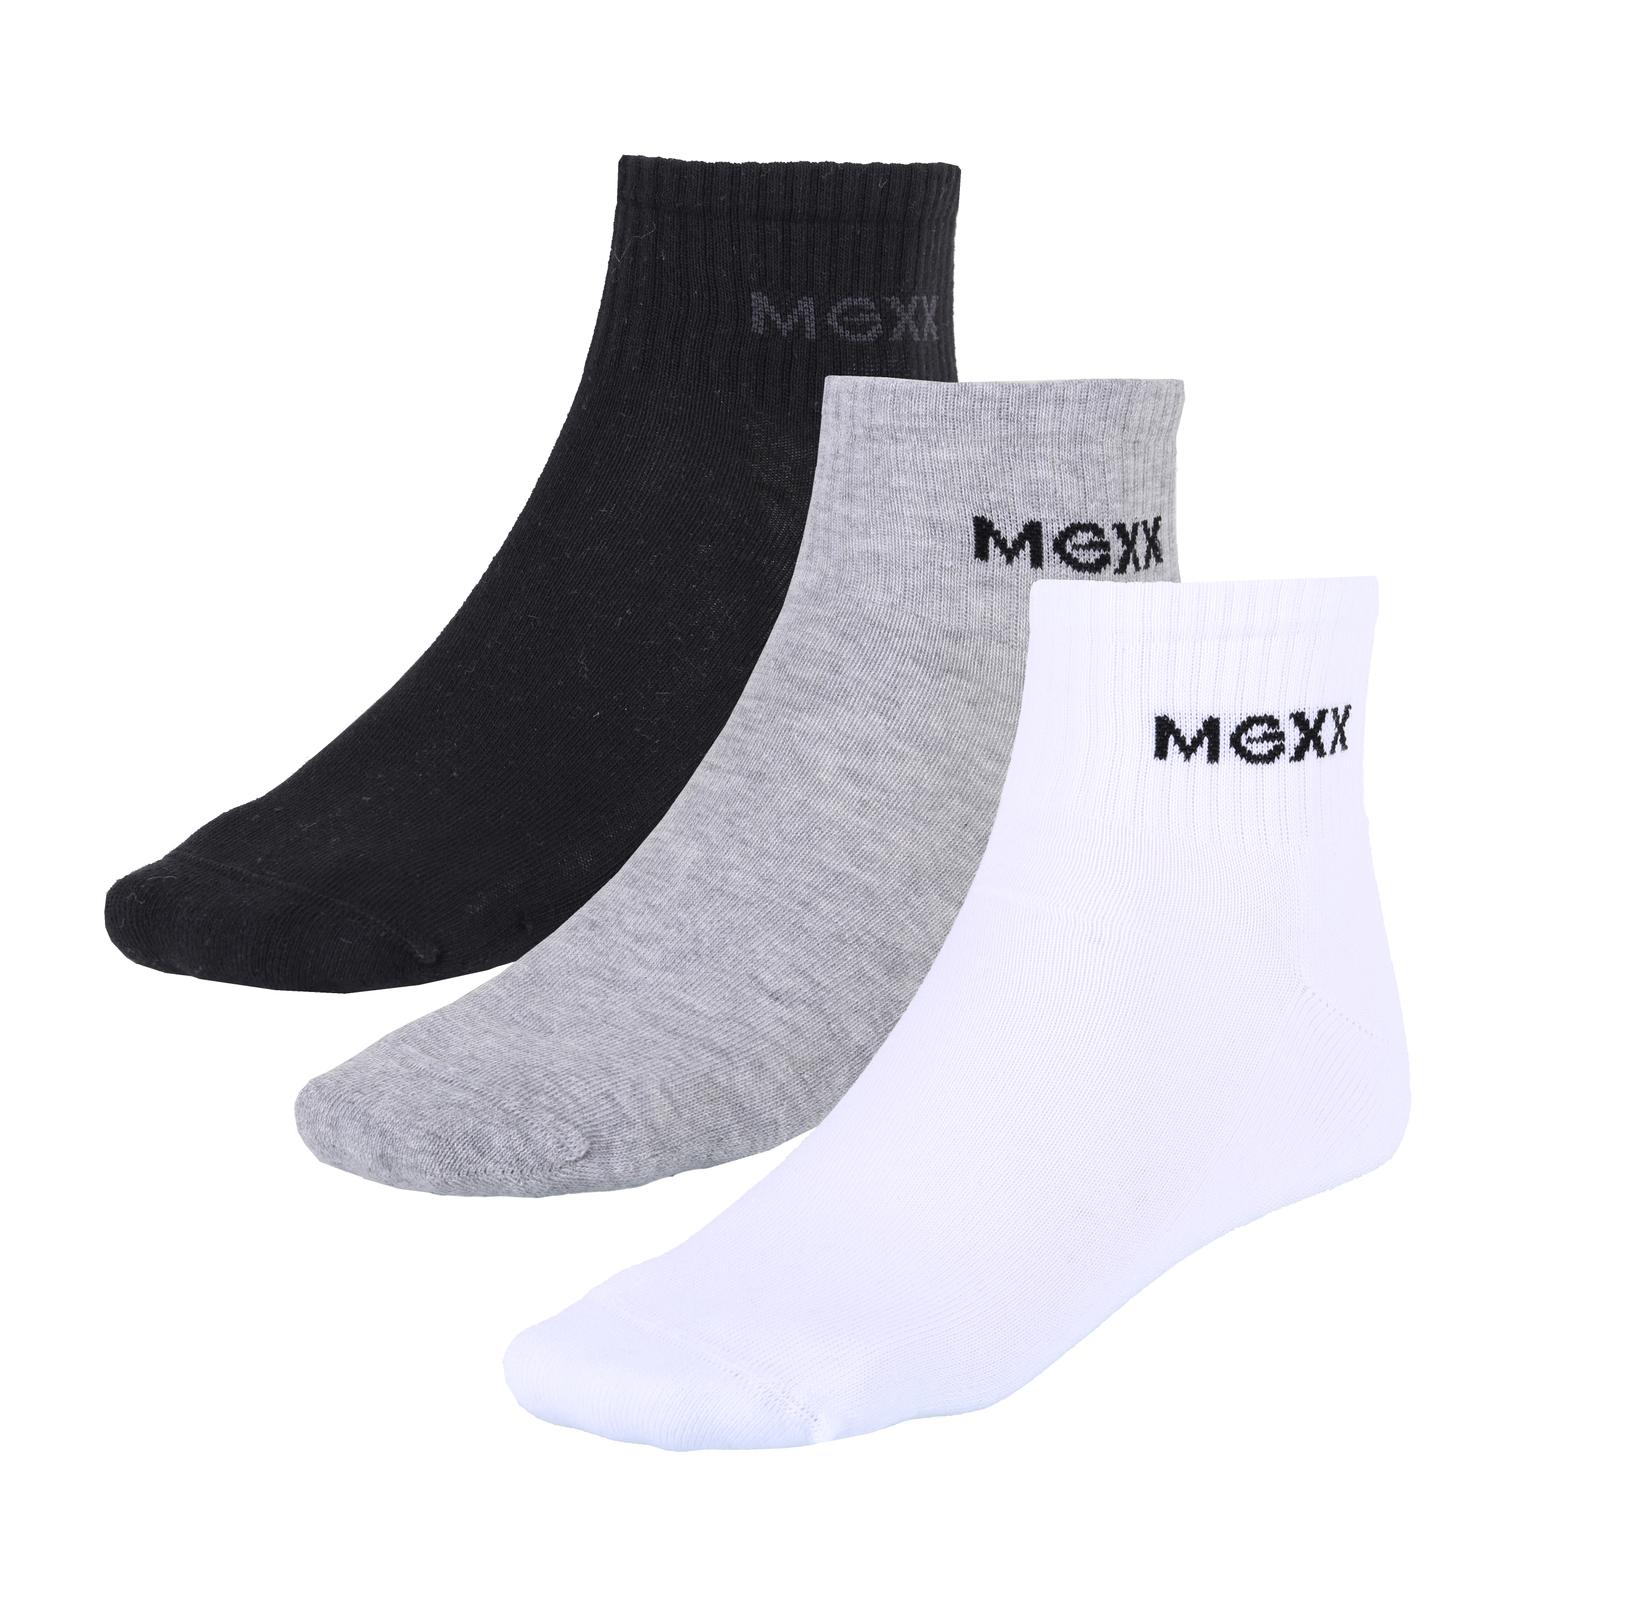 Selected image for MEXX Sportske čarape Quarter, Pakovanje od 3 para